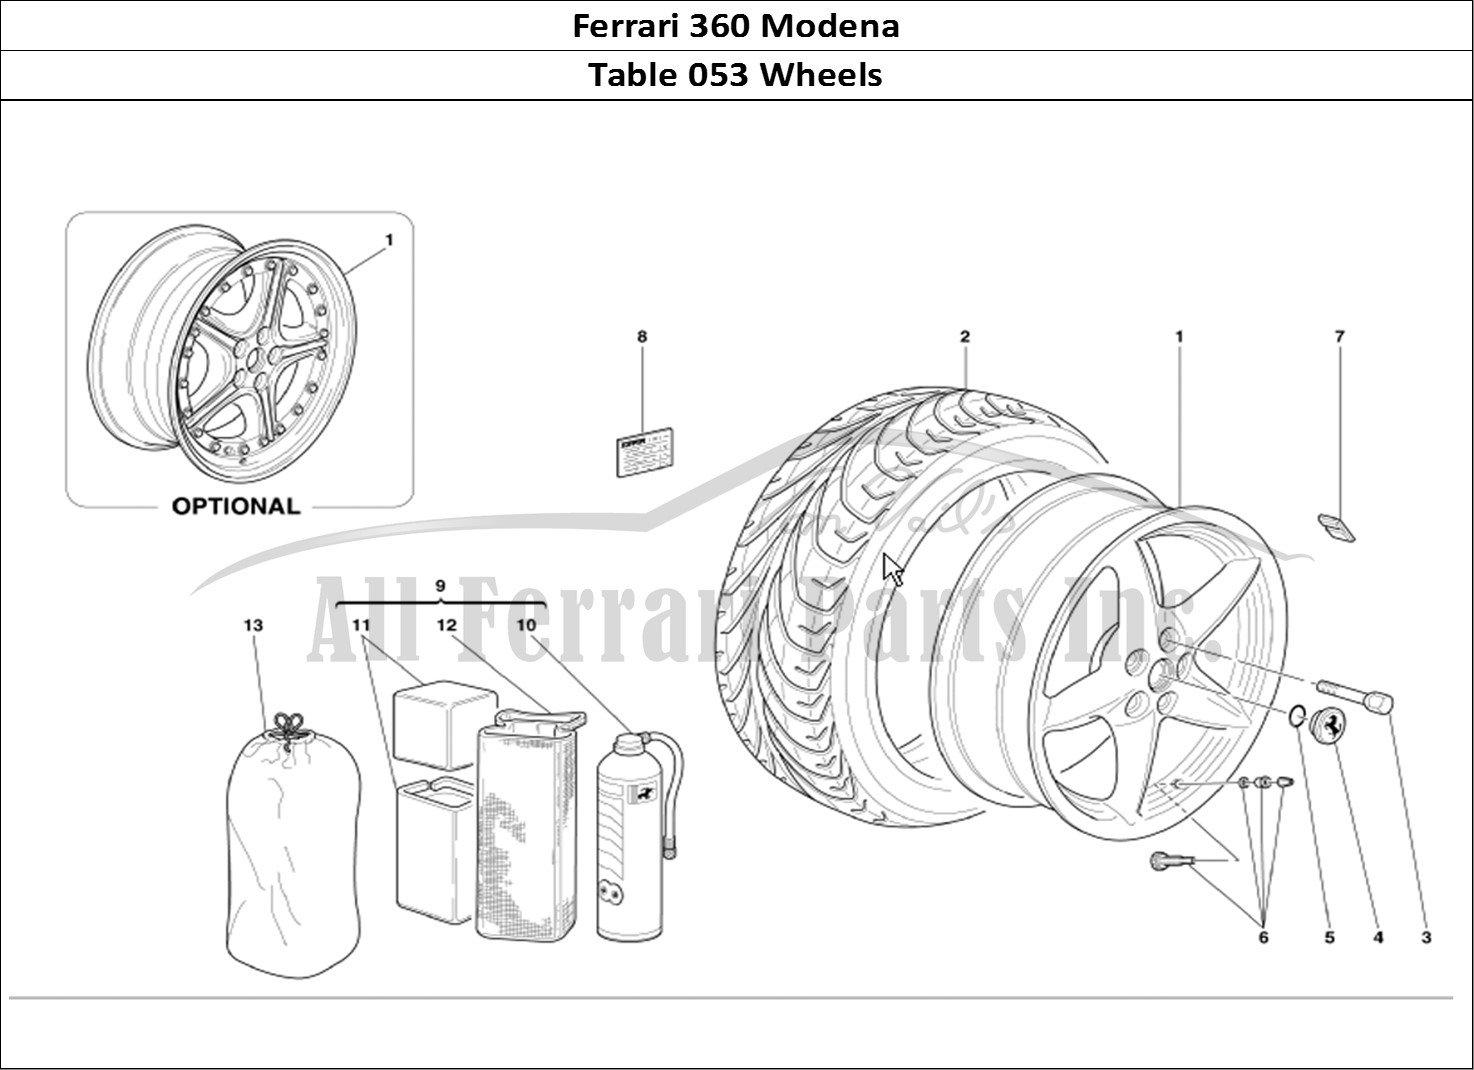 Ferrari Parts Ferrari 360 Modena Page 053 Wheels